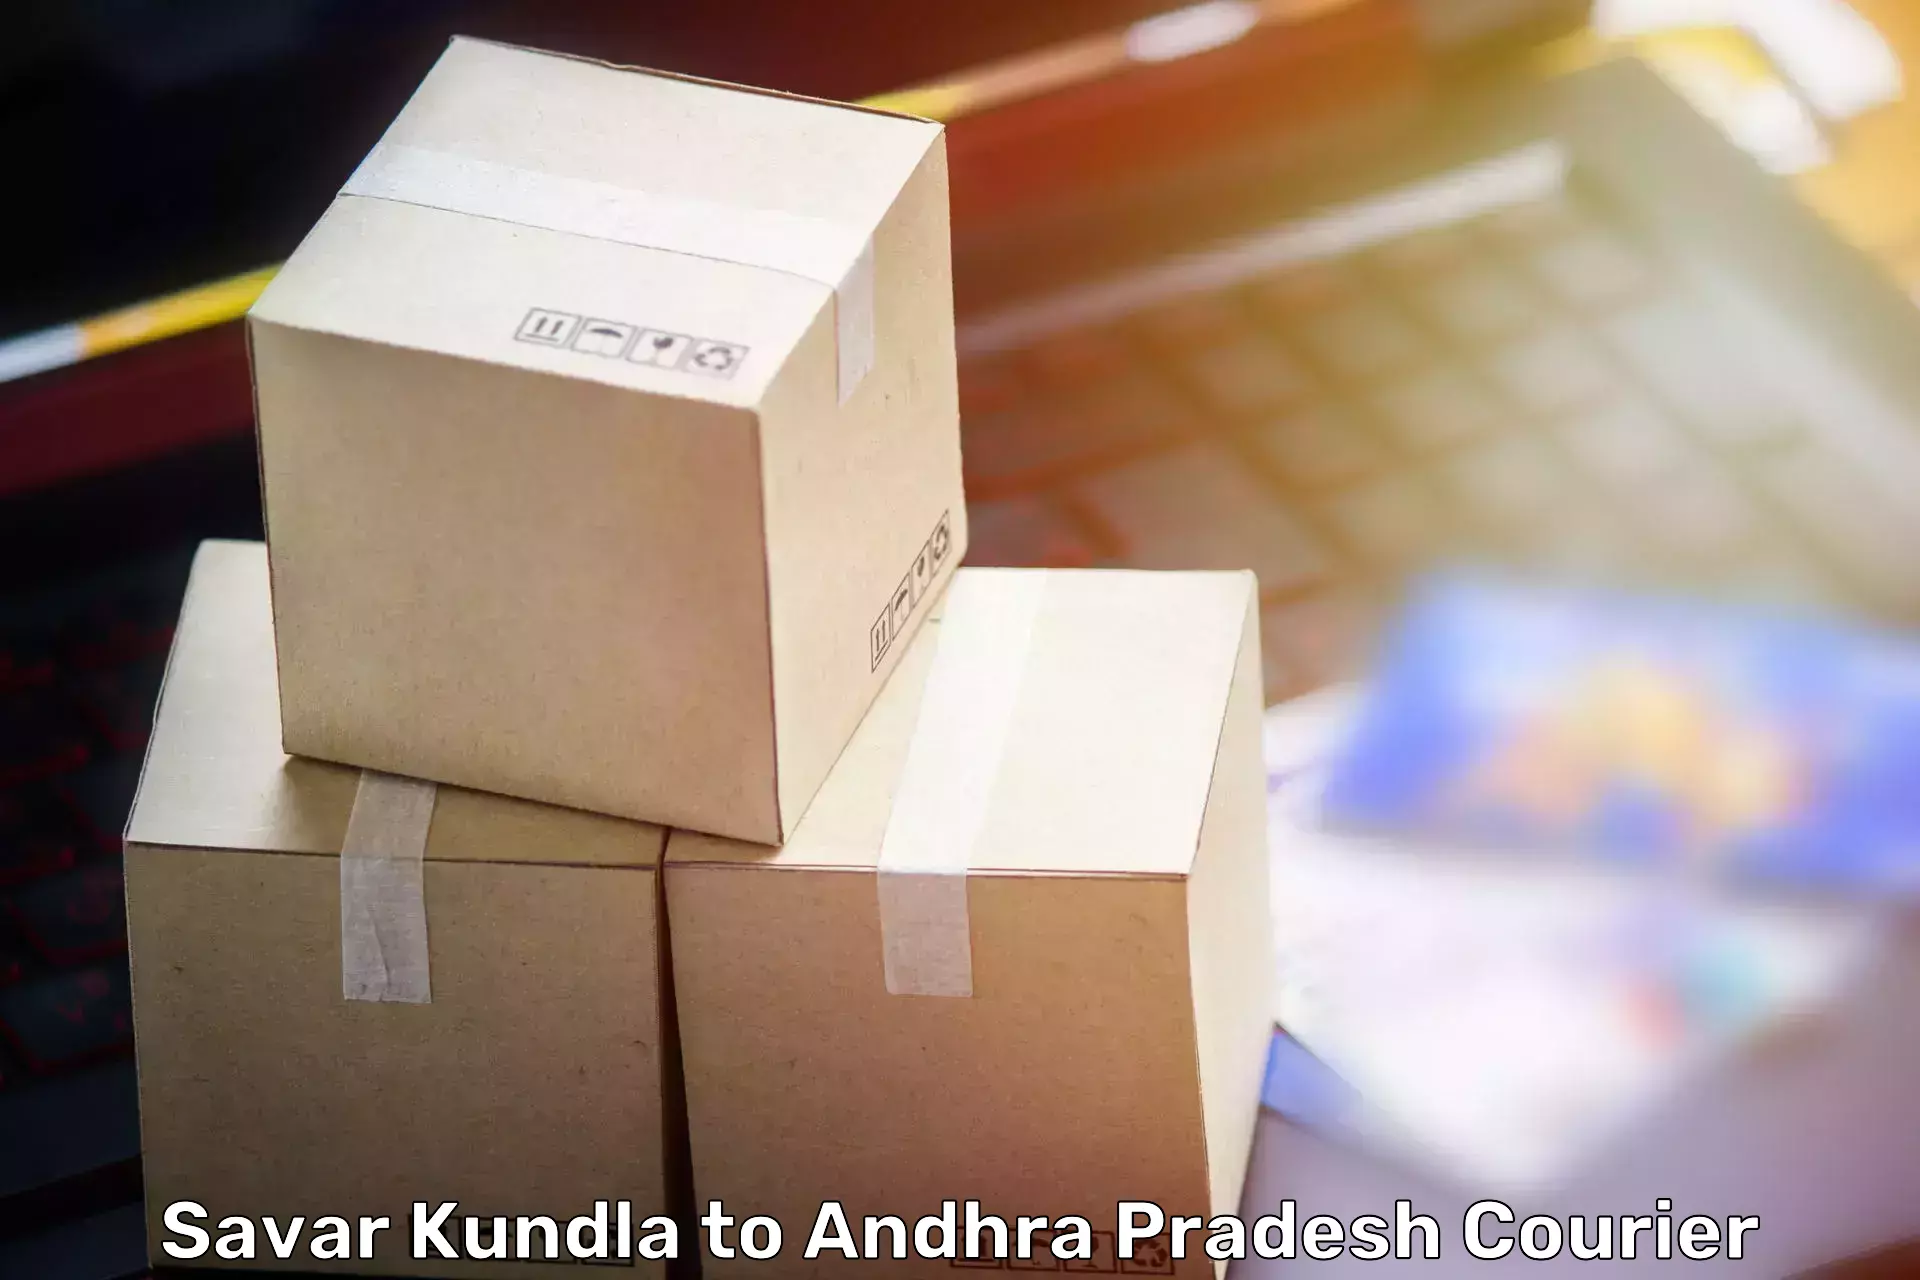 Moving and storage services Savar Kundla to Tirupati